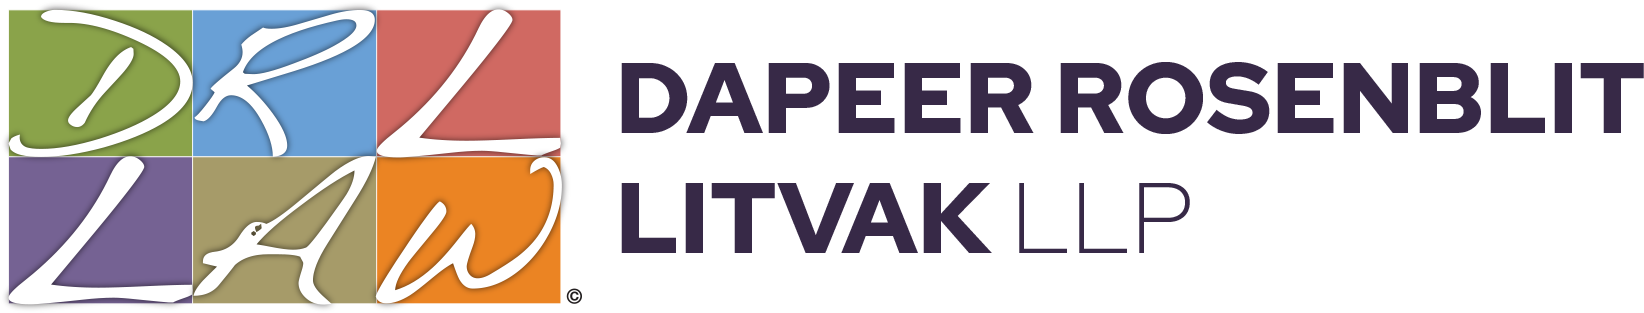 DRL Law, Dapeer Rosenblit & Litvak LLP